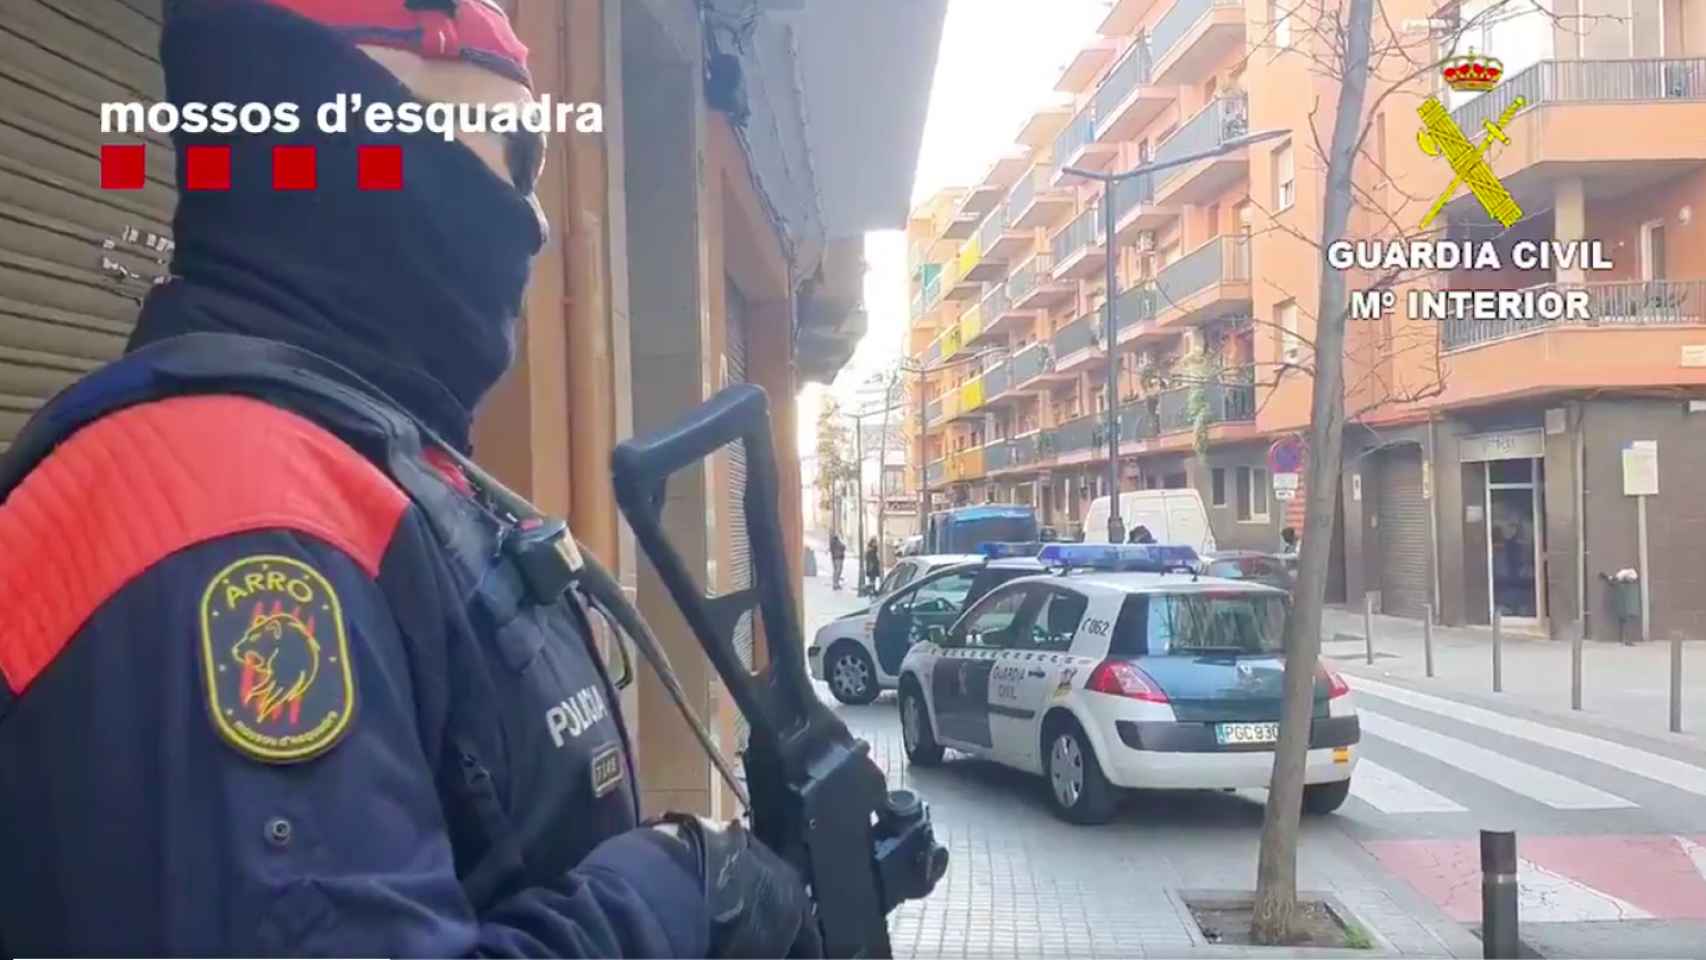 Mosso d'Esquadra en la redada contra la inmigración ilegal en Barcelona / MOSSOS D'ESQUADRA vía TWITTER